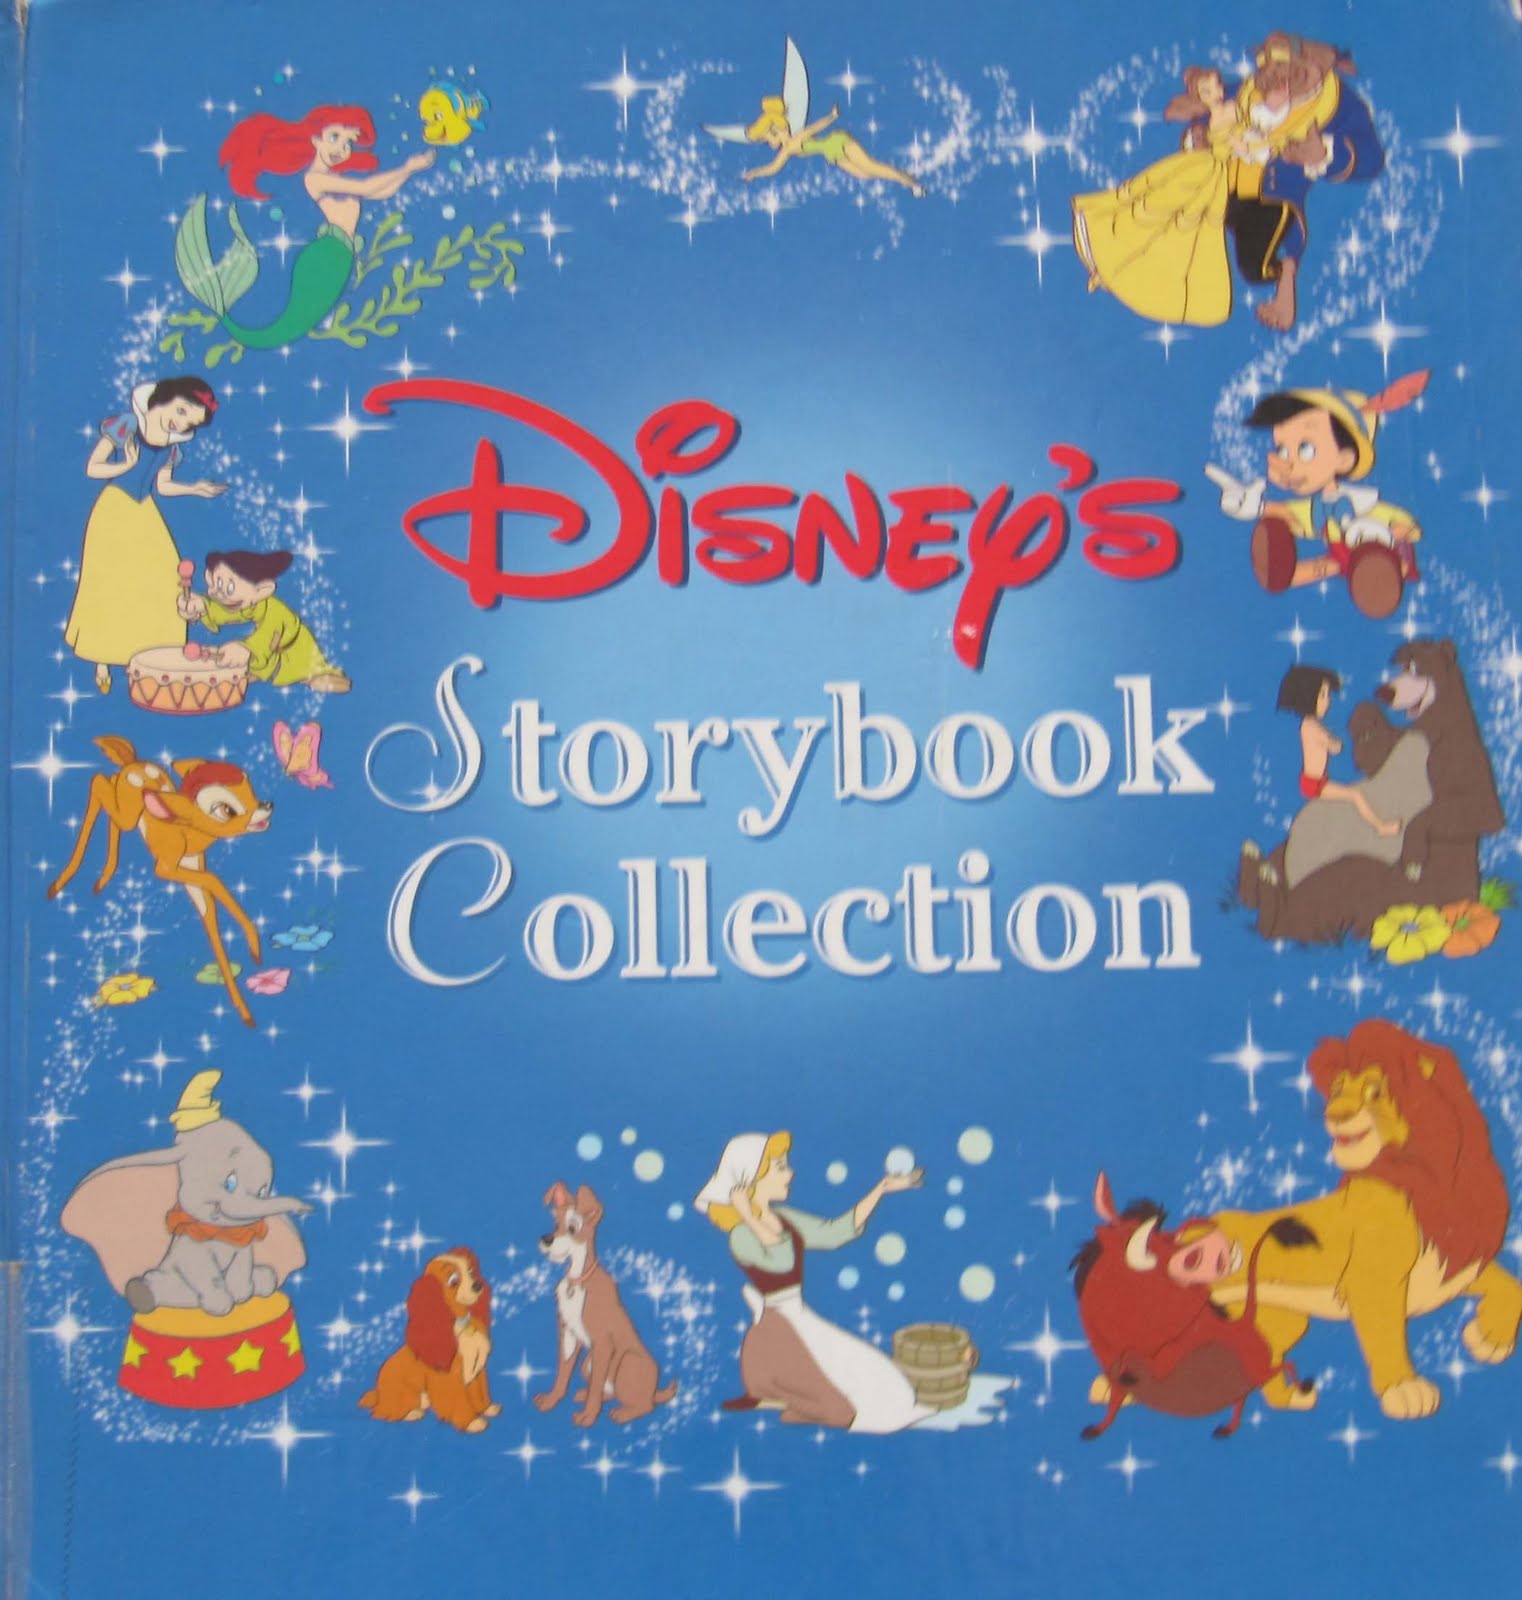 Disney's Storybook Collection | Disney Wiki | FANDOM powered by Wikia